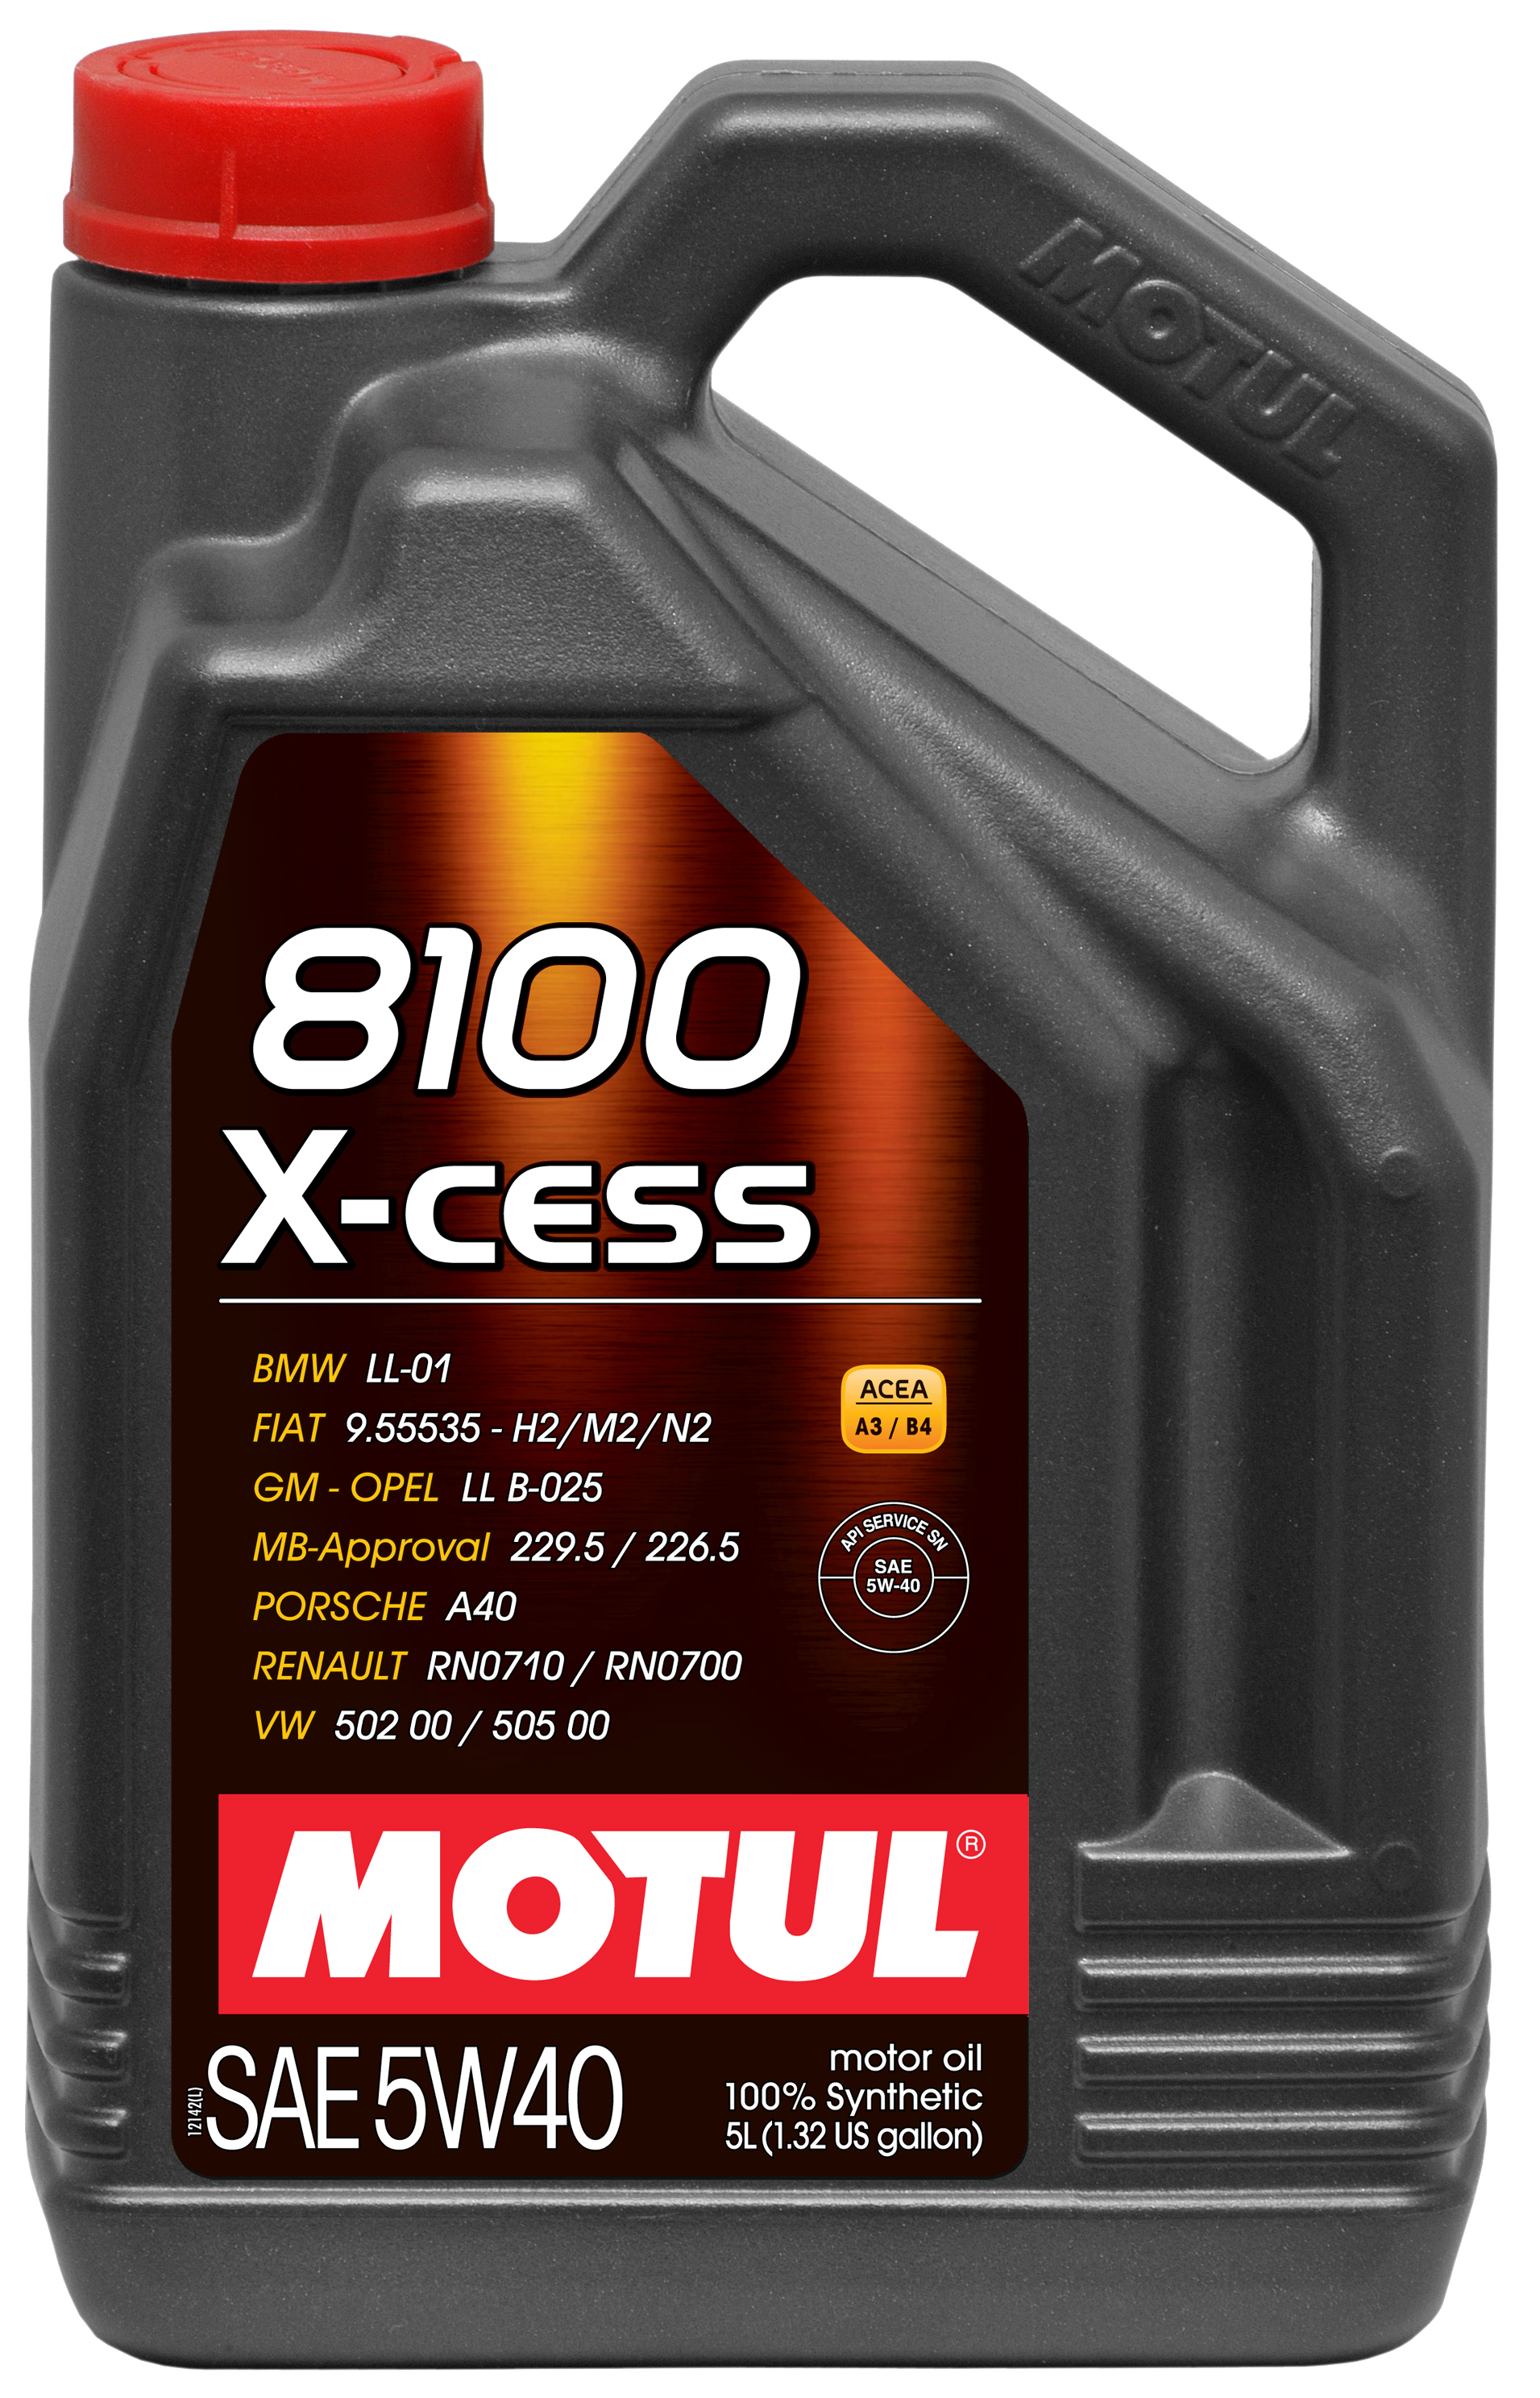 MOTUL 8100 X-CESS 5W40 - 5L - Synthetic Engine Oil